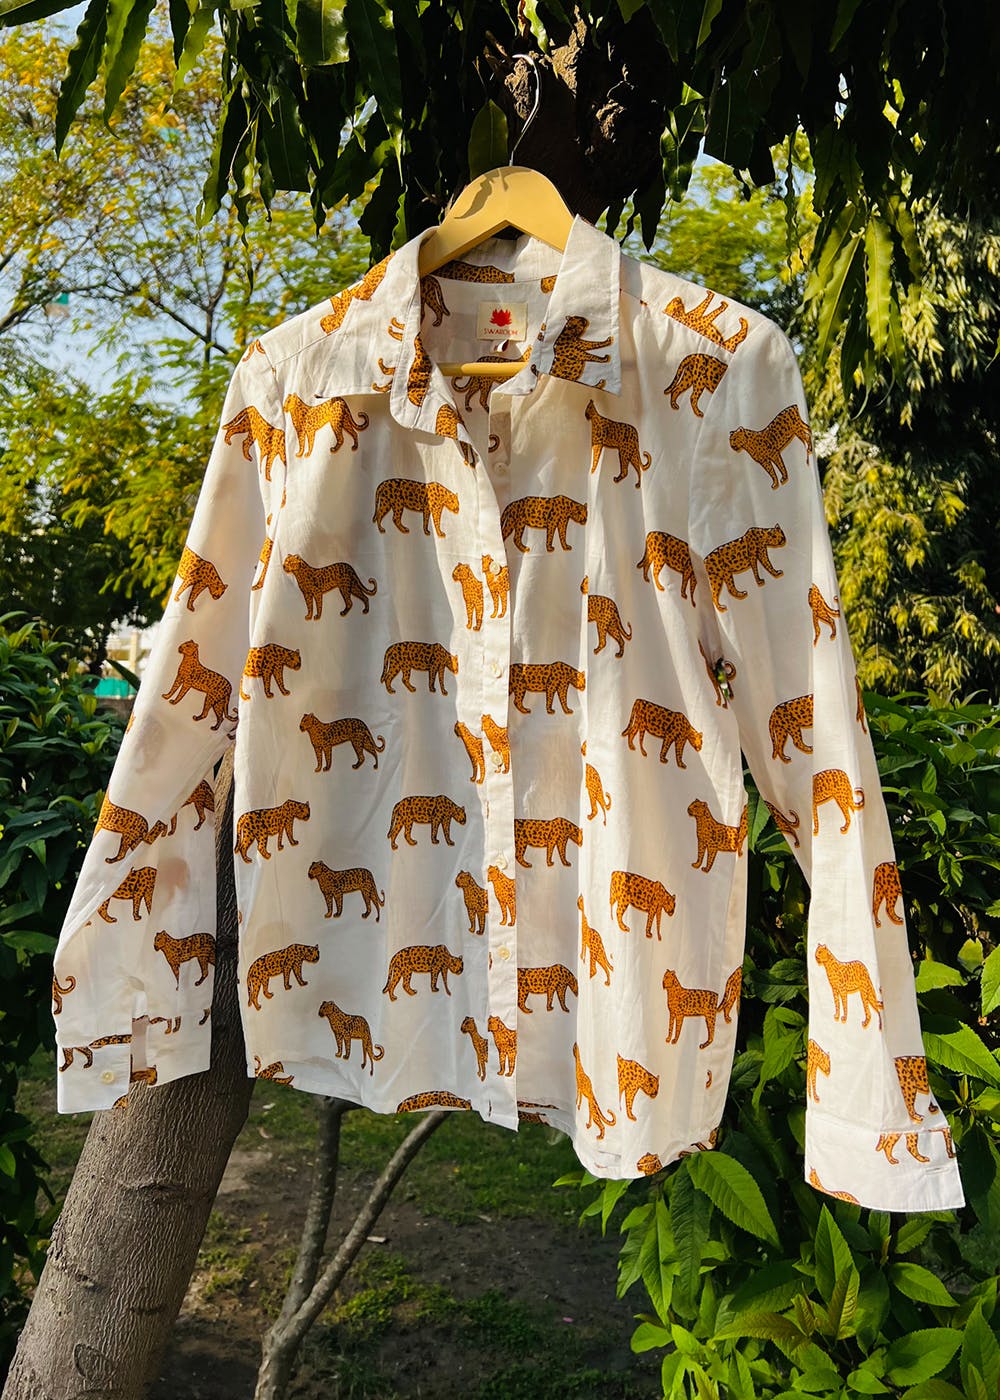 Leopard Printed Shirt